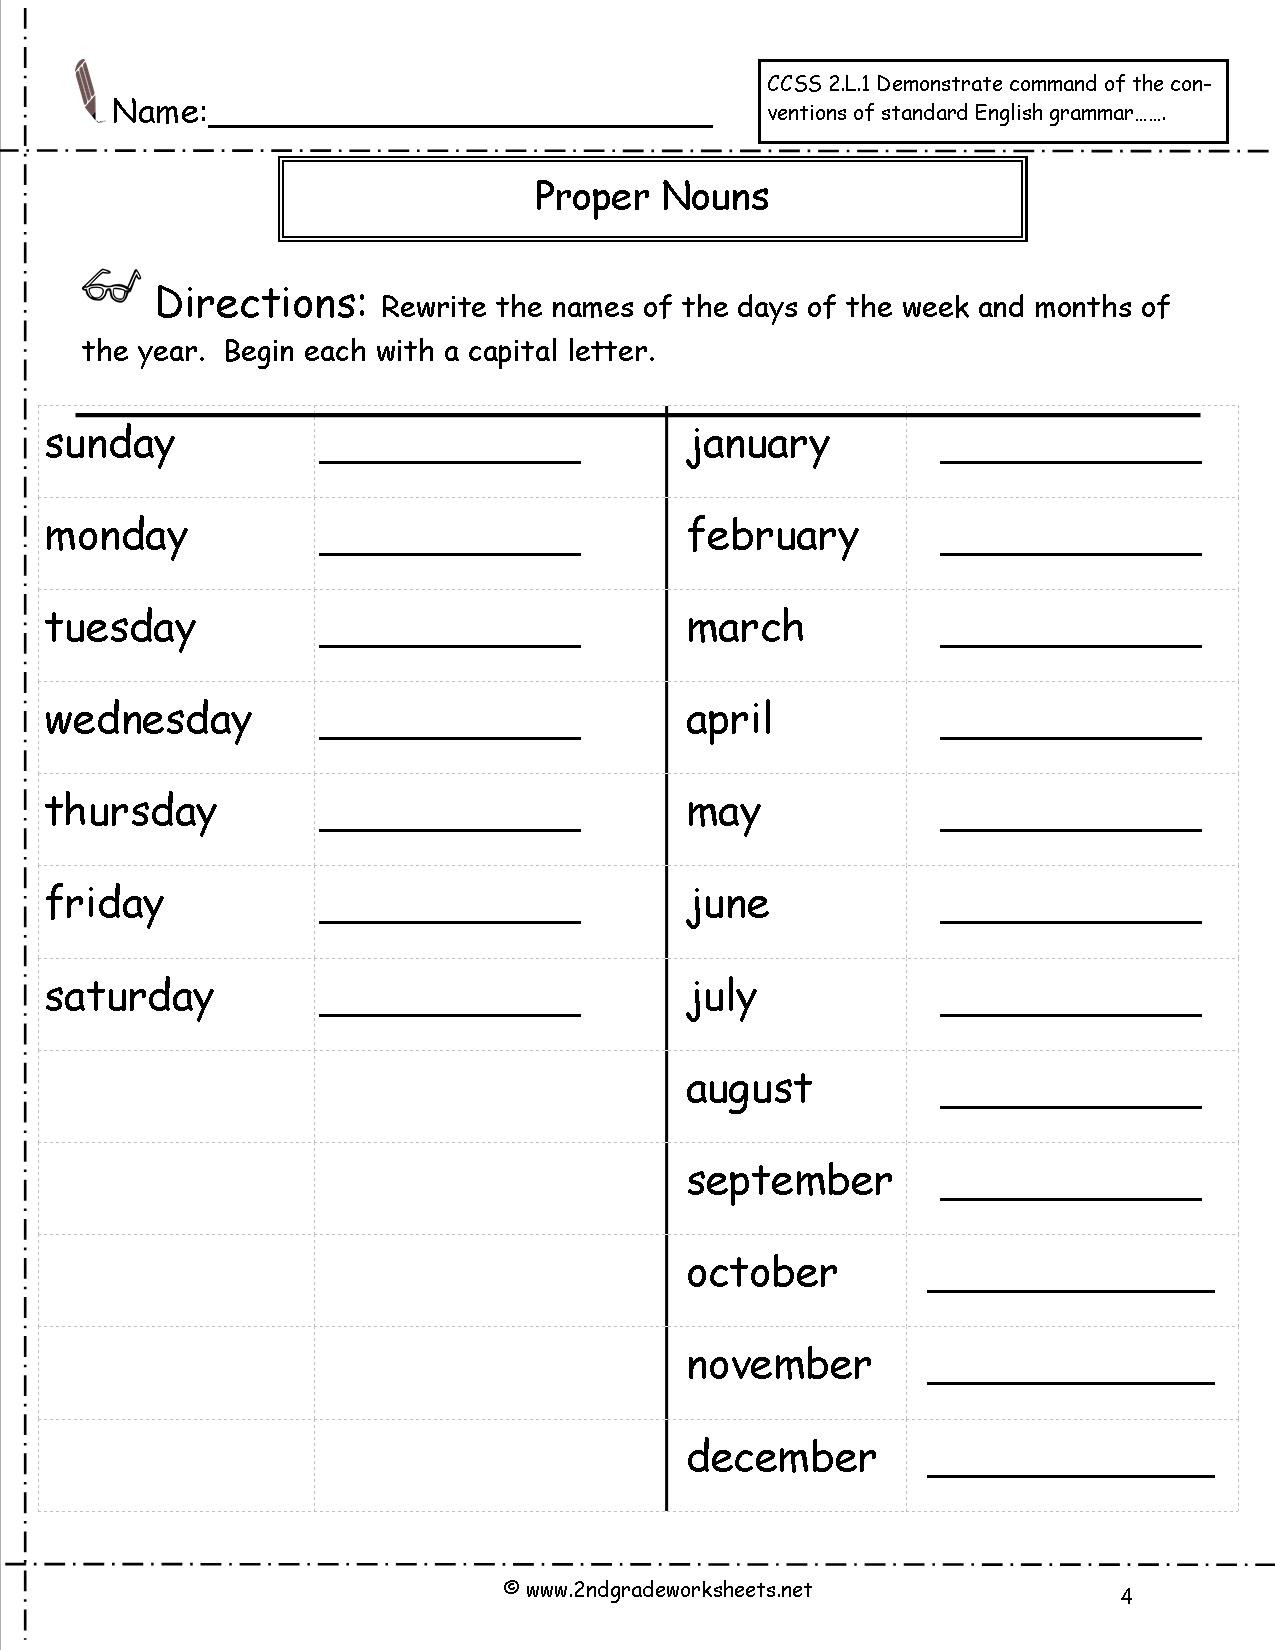 Proper Nouns Worksheet 2nd Grade Mon and Proper Nouns Worksheet